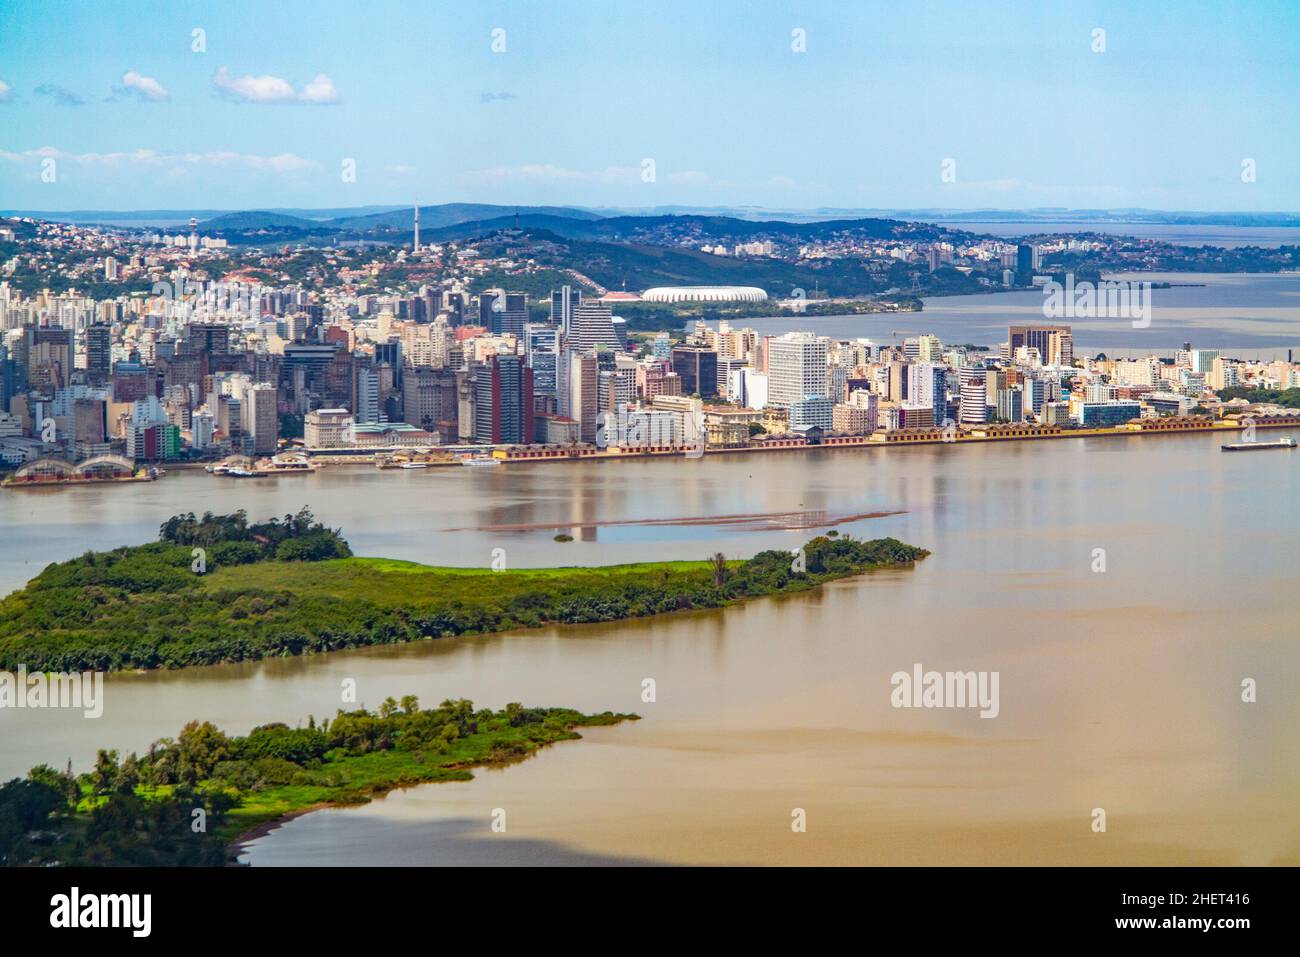 scenic aerial view of Porto Alegre in Brazil Stock Photo